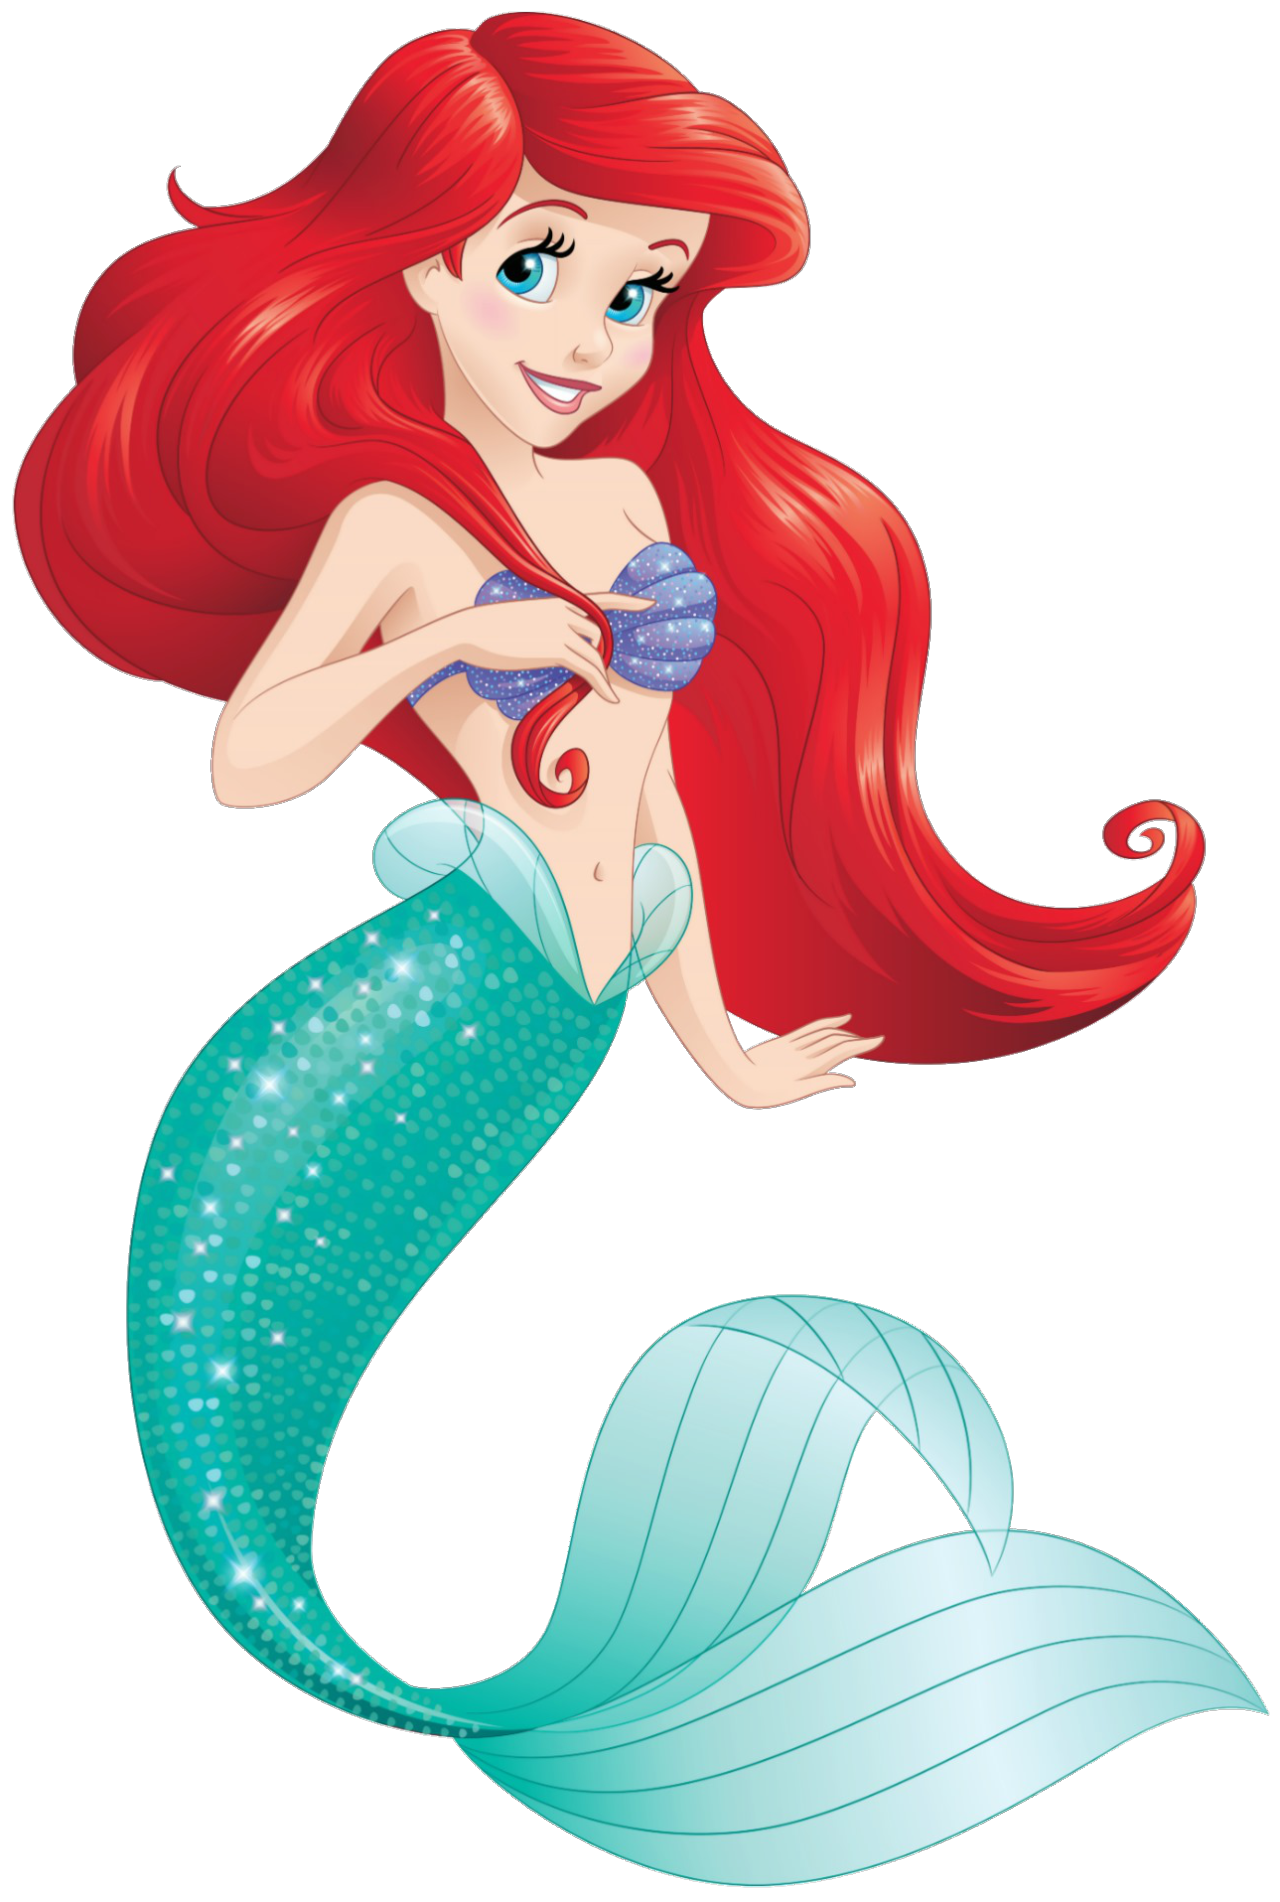 Ariel the Little Mermaid Disn